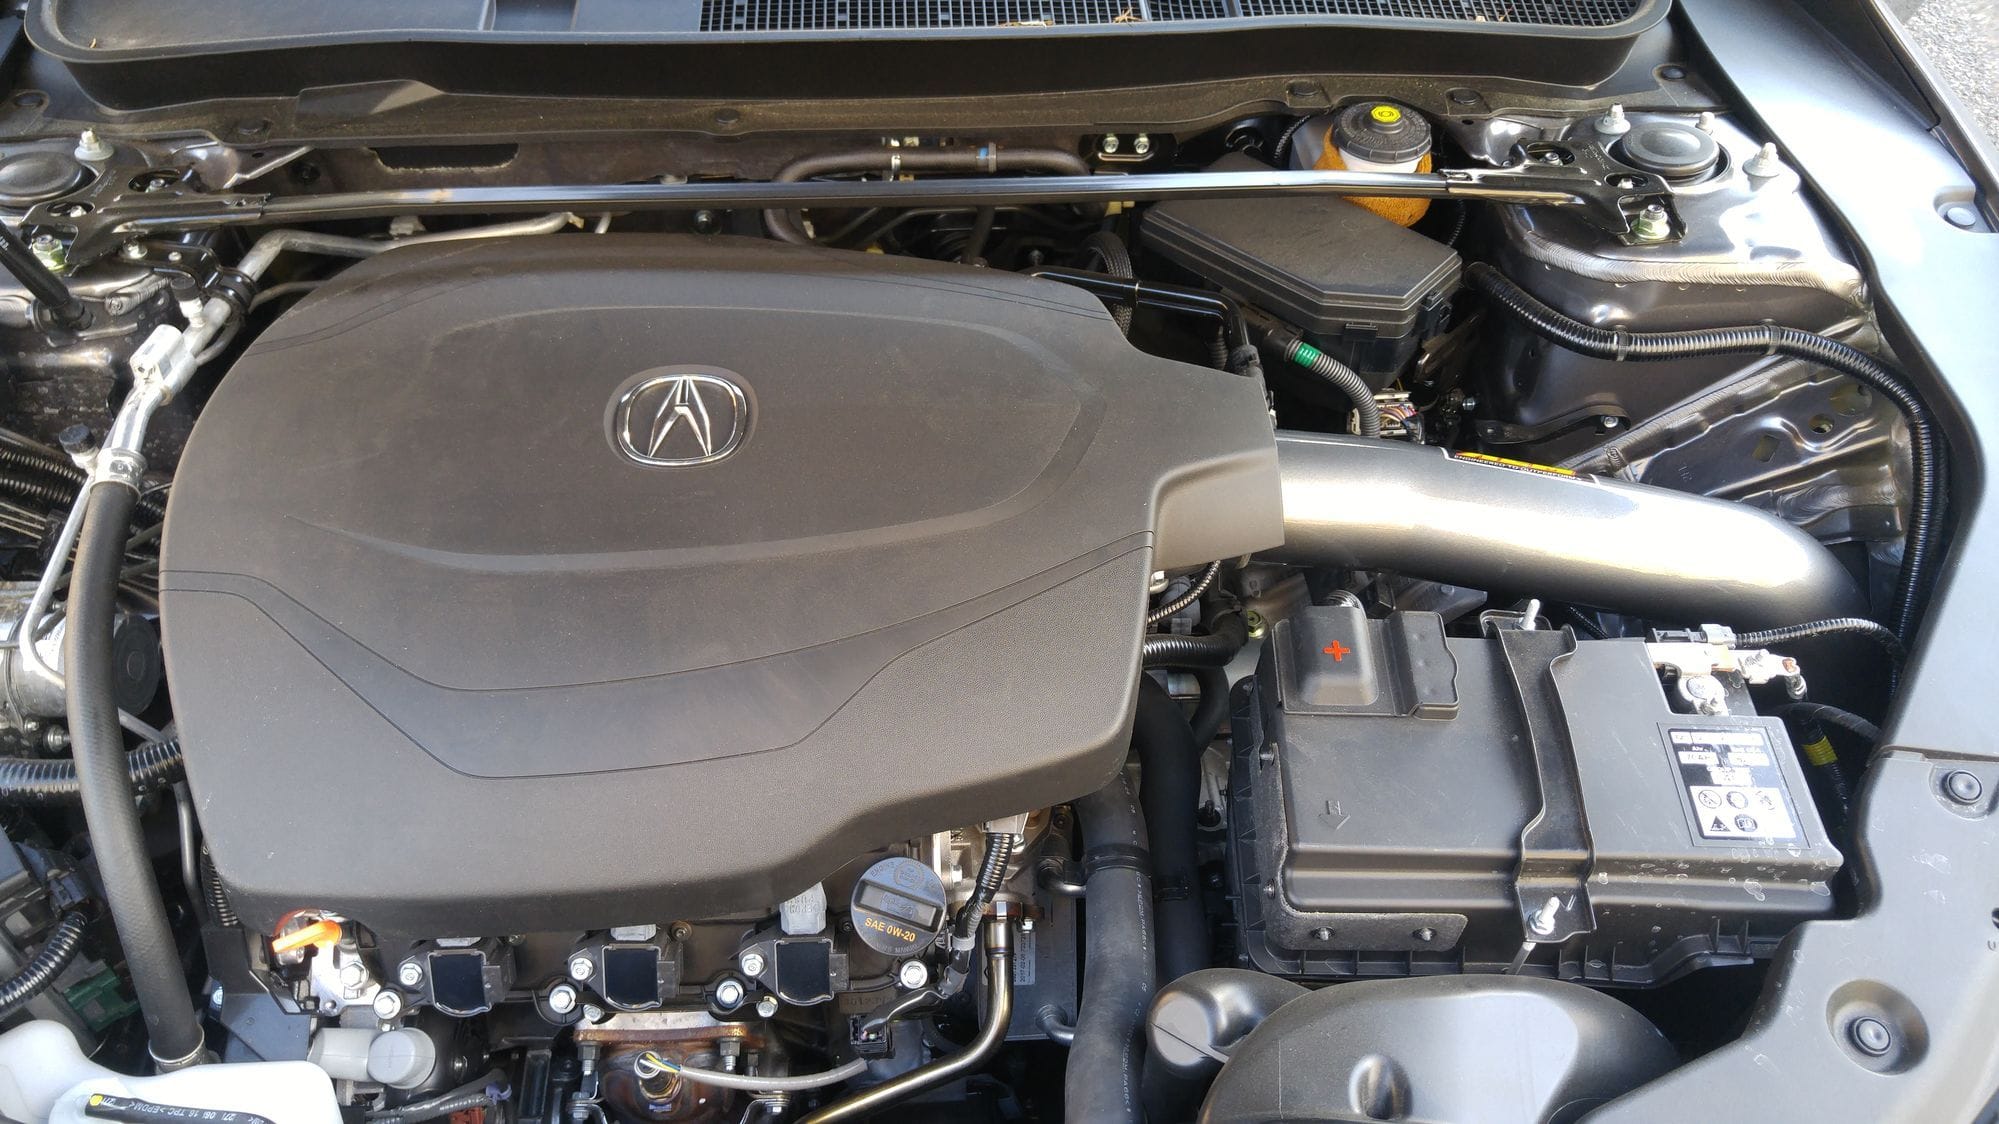 Engine - Intake/Fuel - FS: ILX 2.4 K24Z7 downpipe, OEM spoiler, Hondata IMG, customs mats / TLX AEM intake - Used - 2013 to 2015 Acura ILX - 2015 to 2017 Acura TLX - Old Bridge, NJ 08857, United States